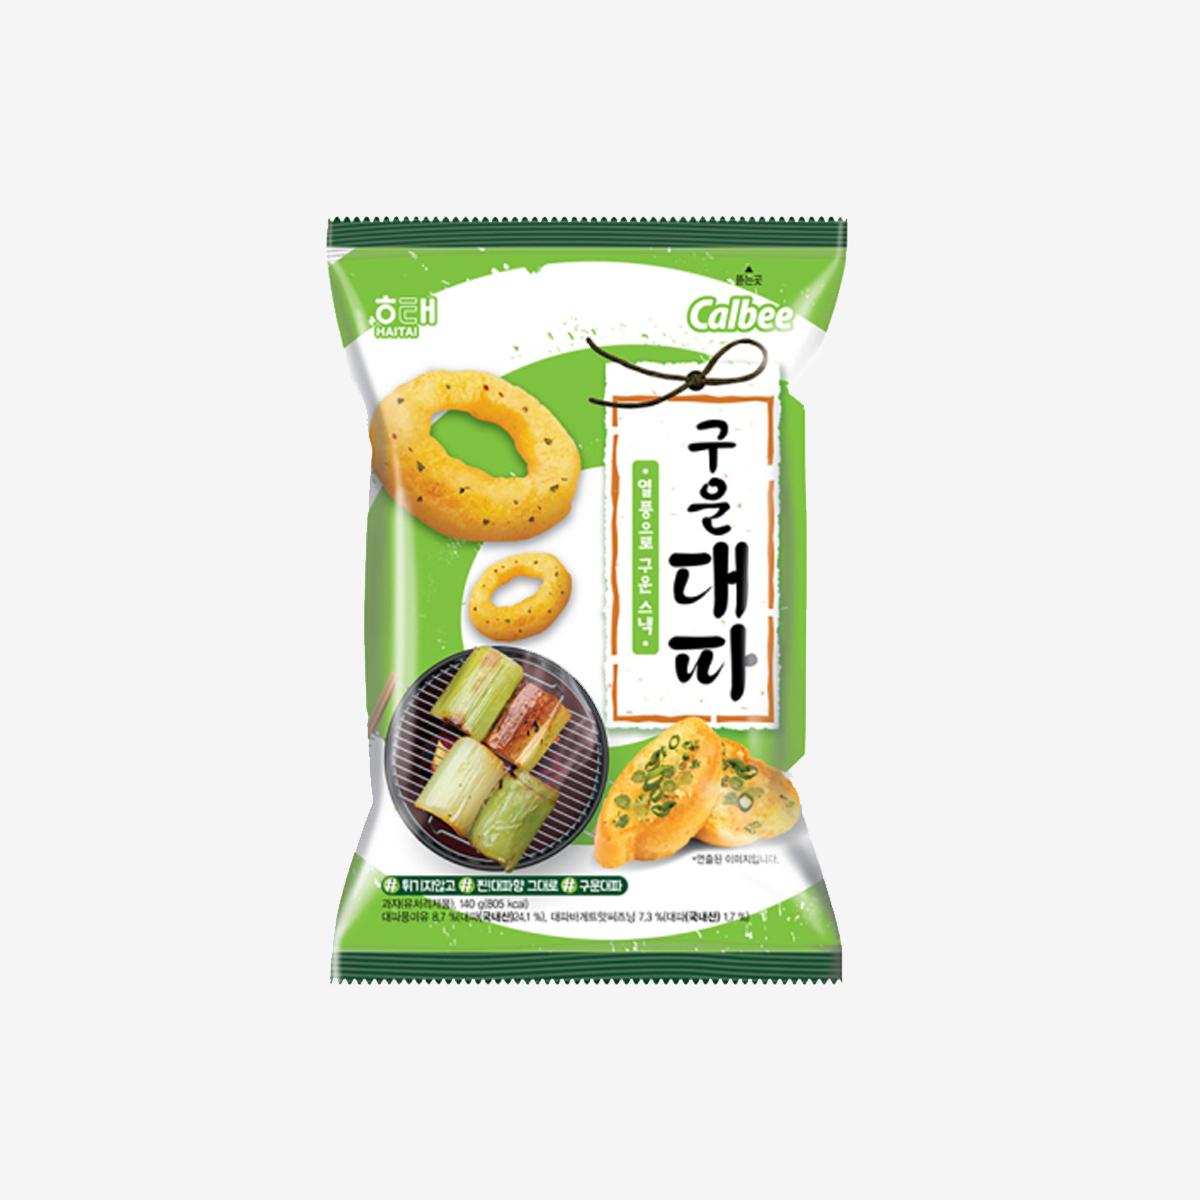 korean brand haitai's Roasted Green Onion Snack bag